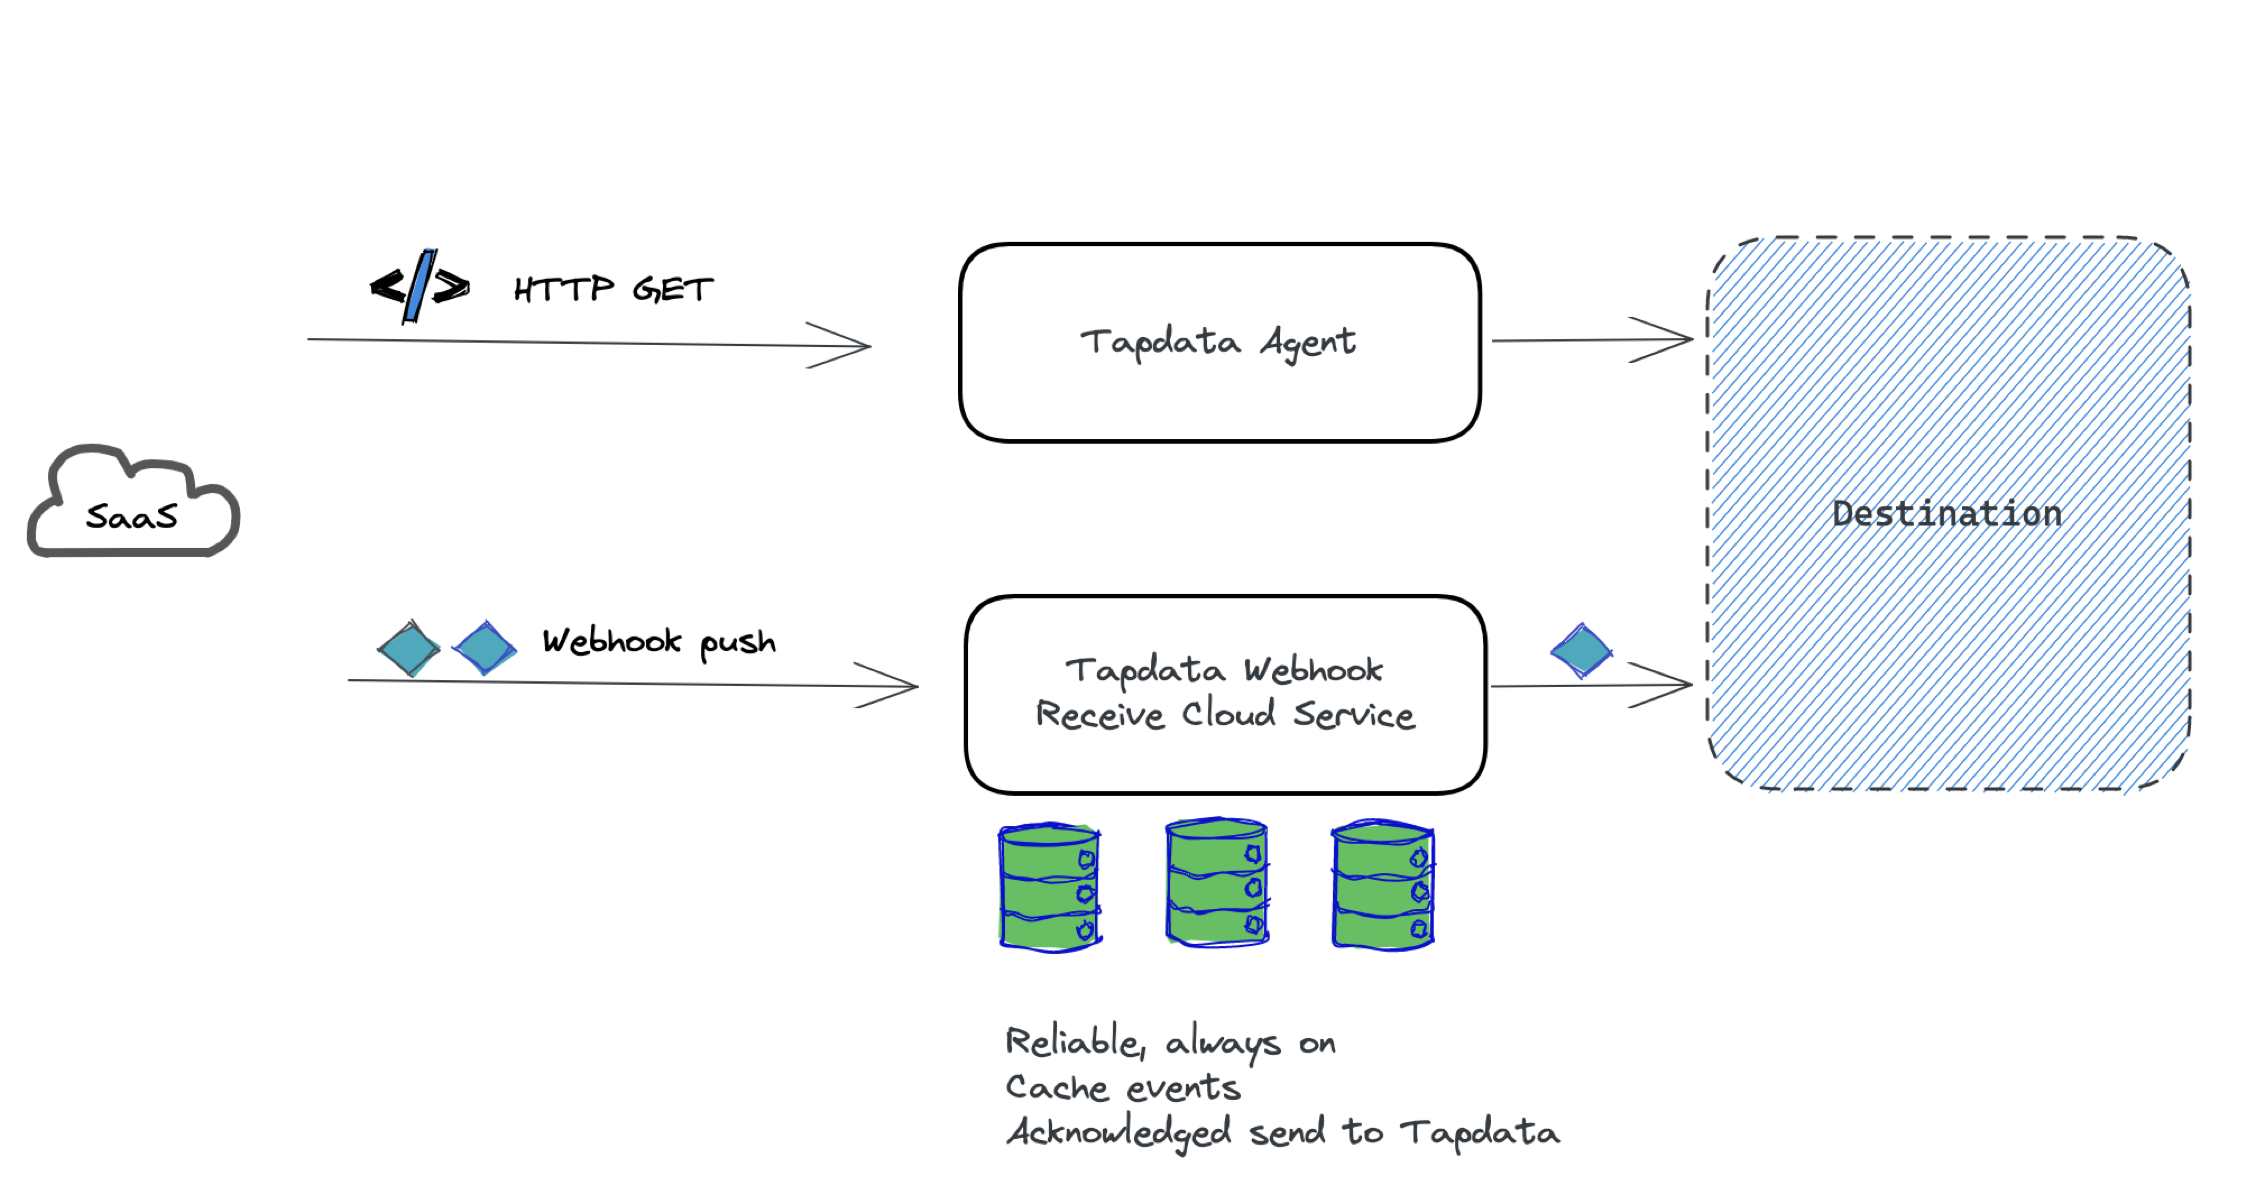 Tapdata 提供可靠的 Webhook Receive 服务